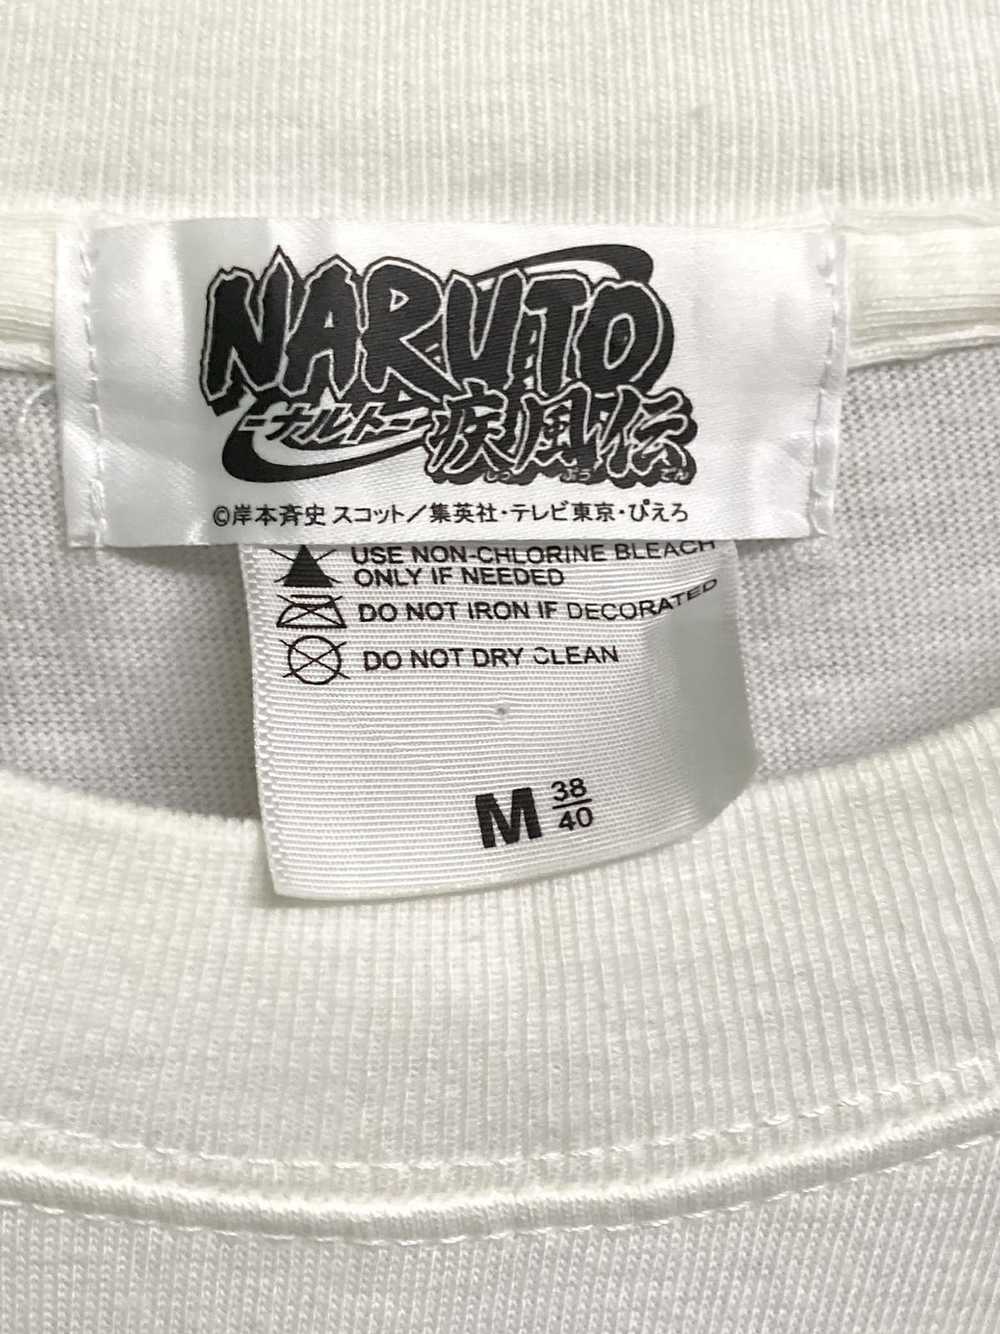 Anima × Japanese Brand Naruto by Masashi Kishimoto - image 3